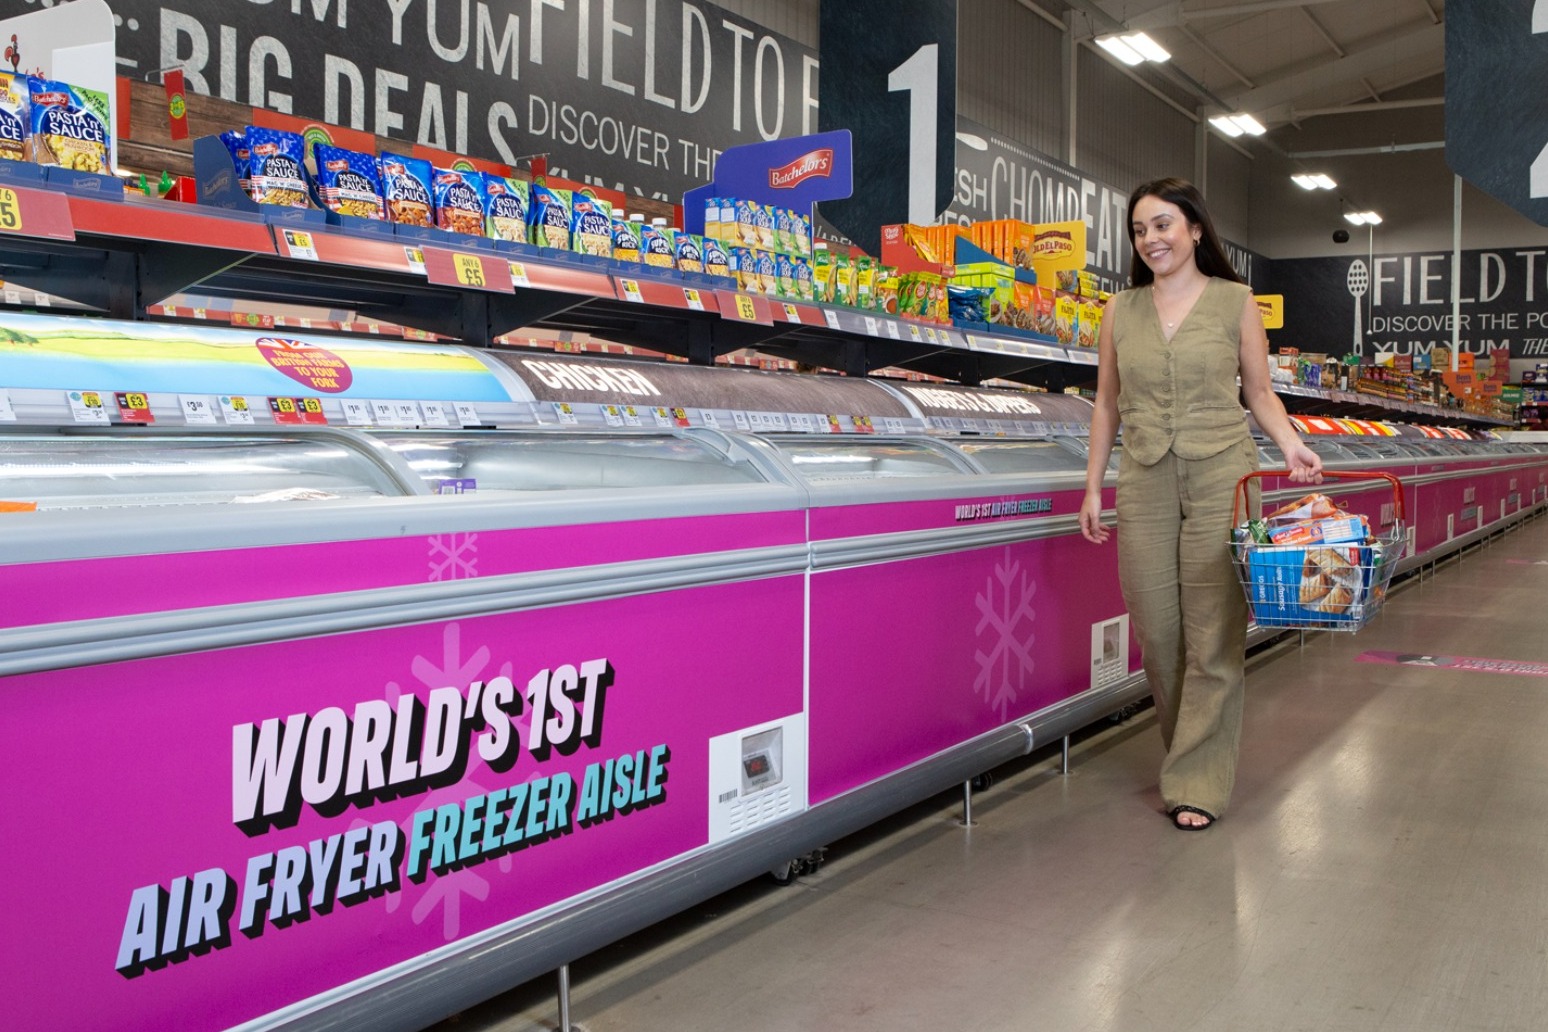 Iceland trials ‘world first’ air fryer food aisle 